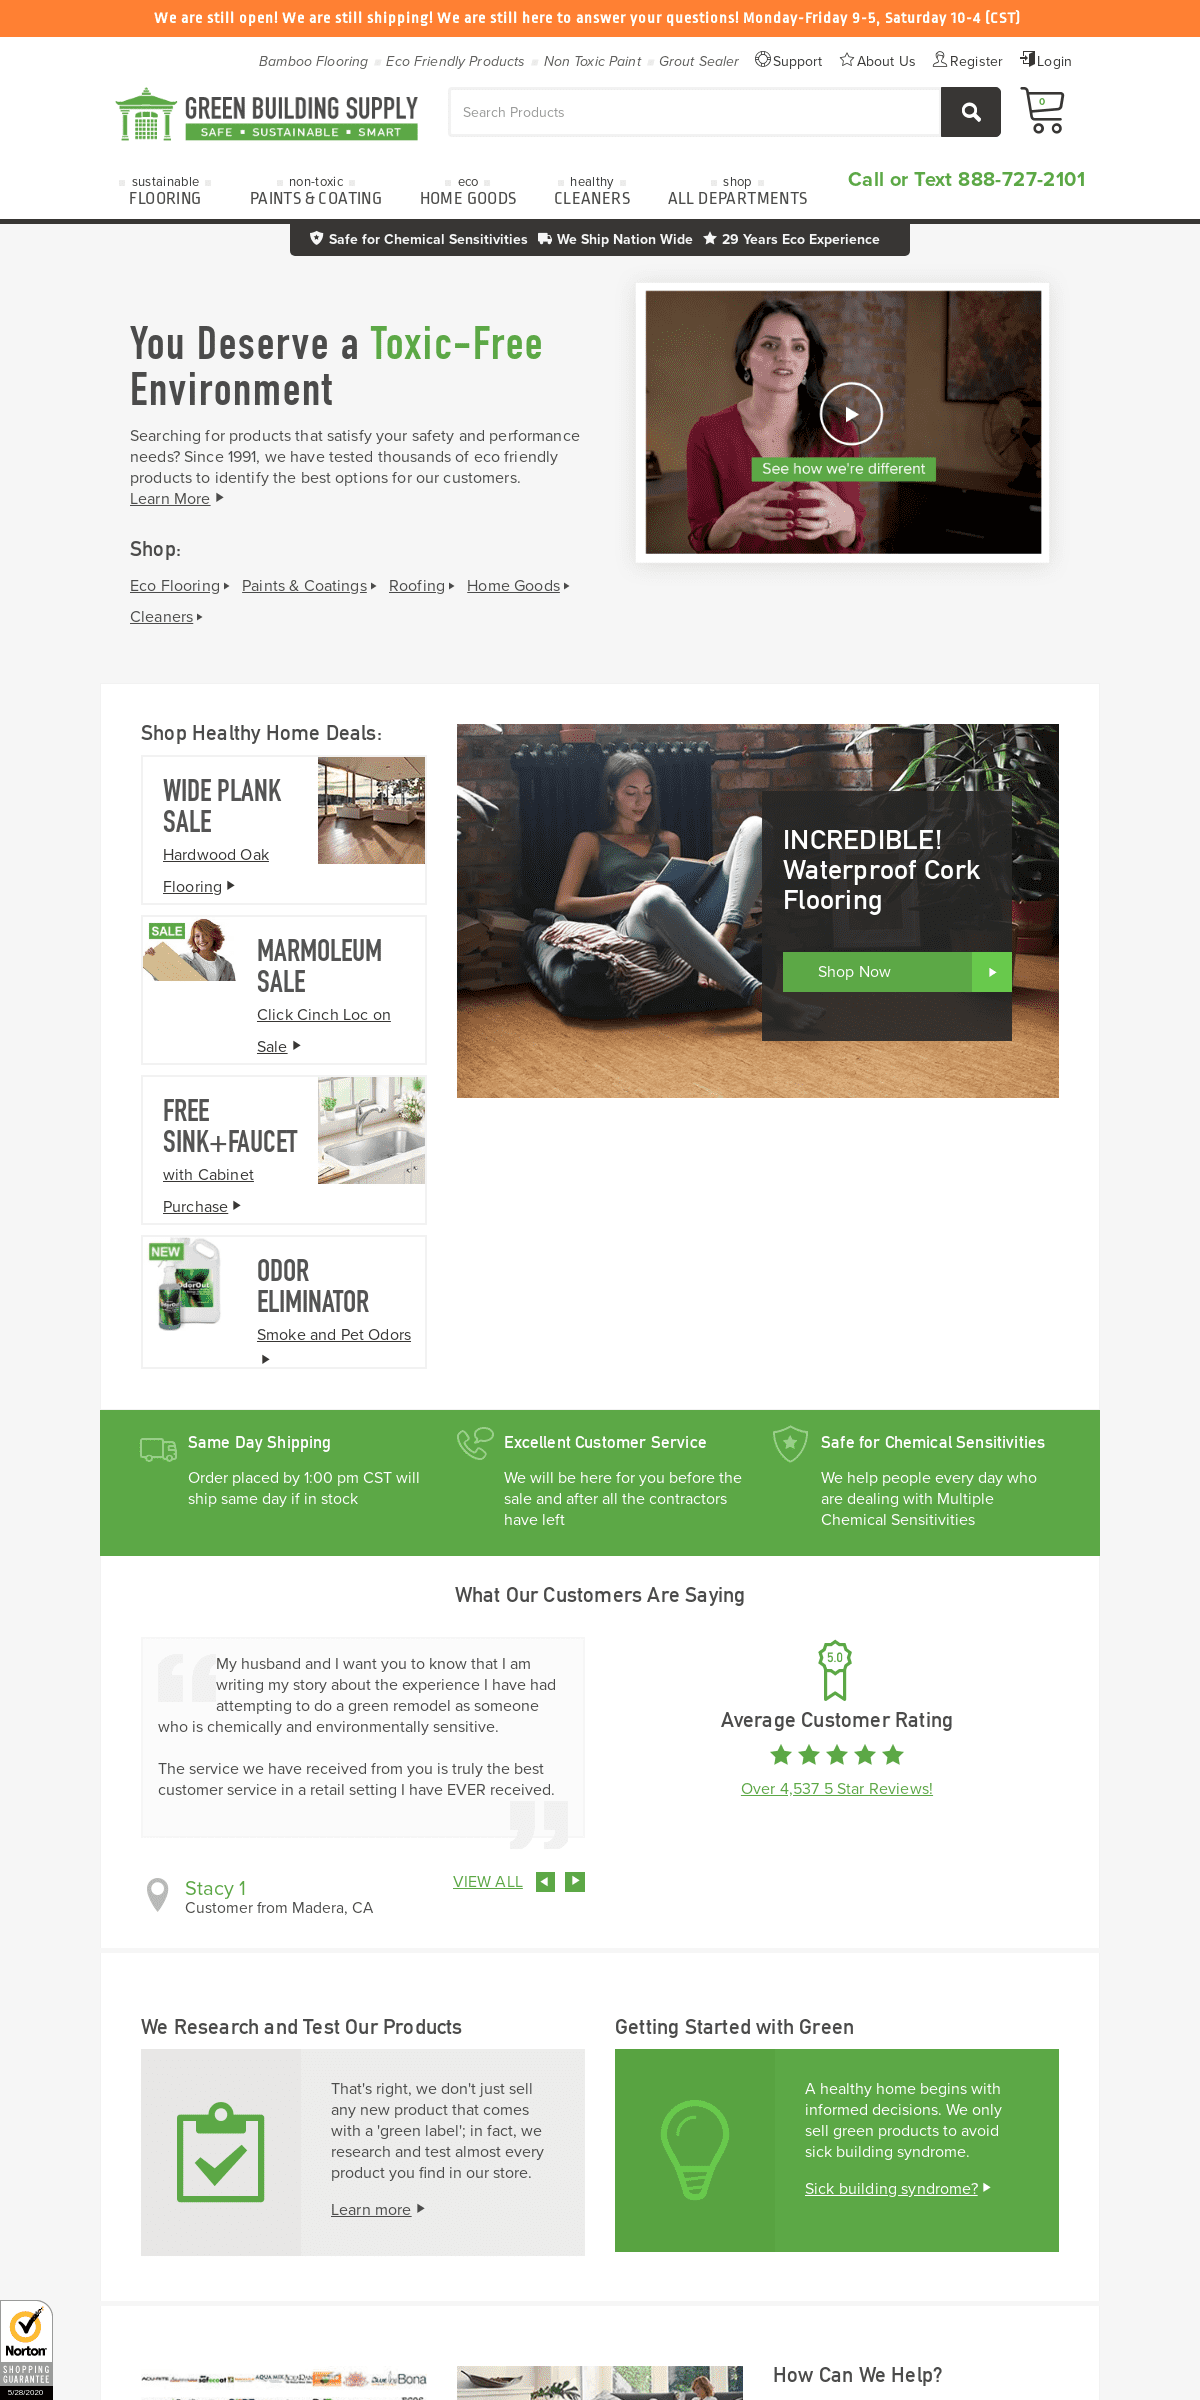 A complete backup of greenbuildingsupply.com